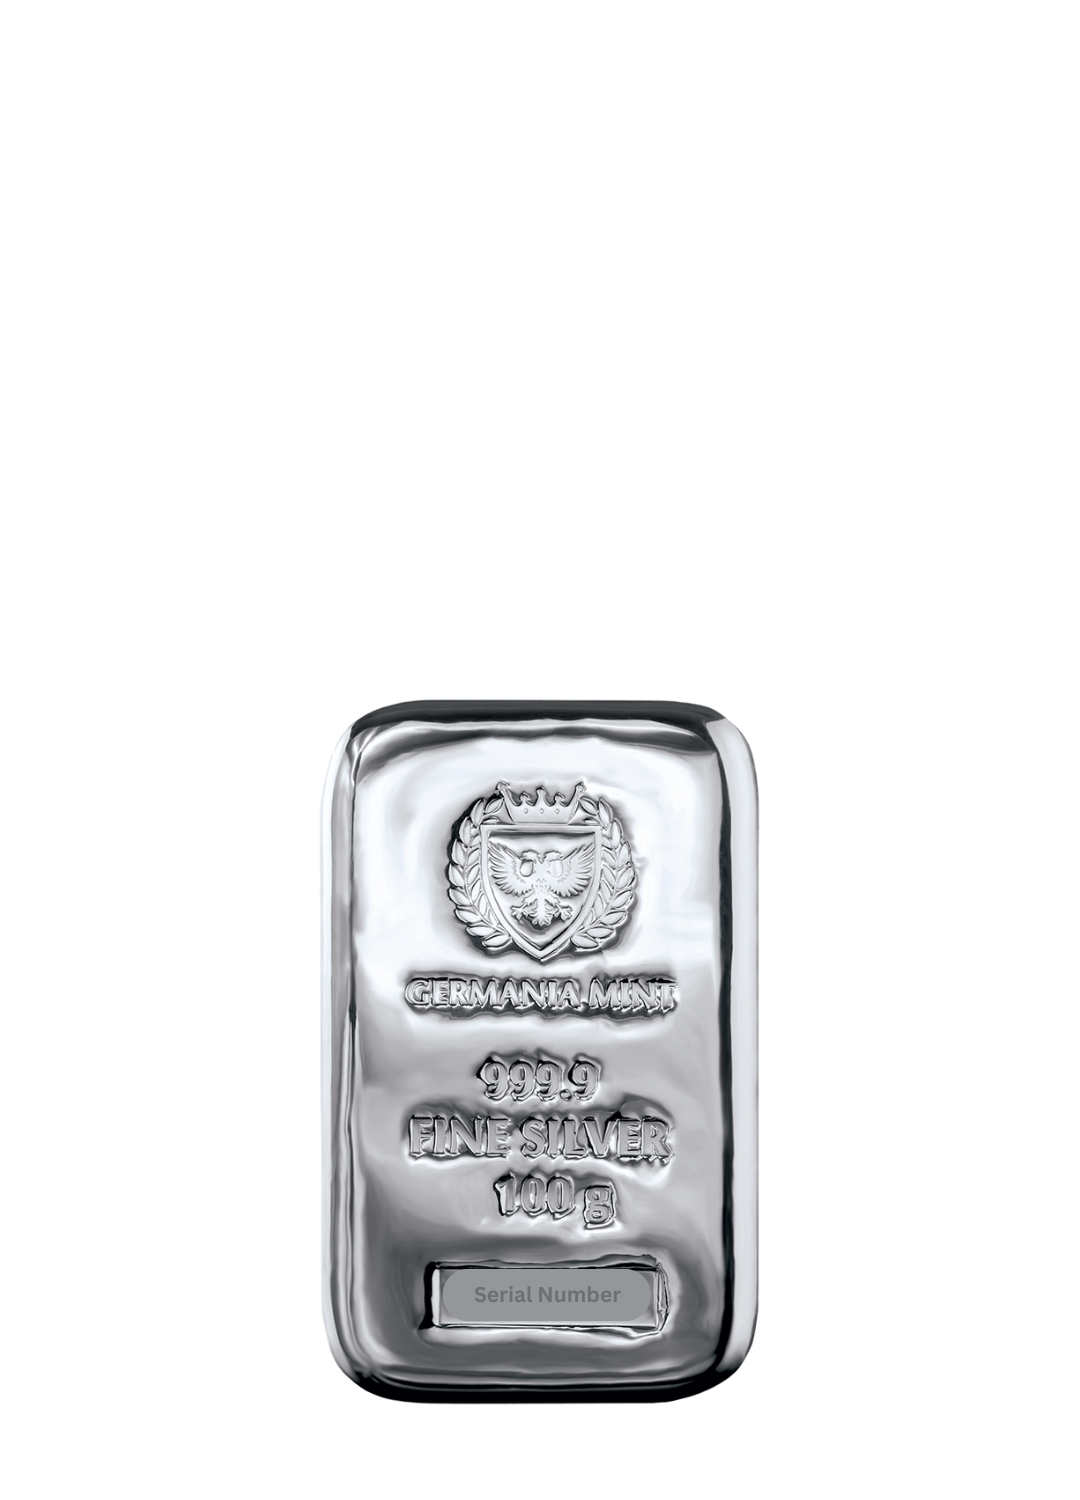 100 gram Germania Mint Silver Bar (Cast)